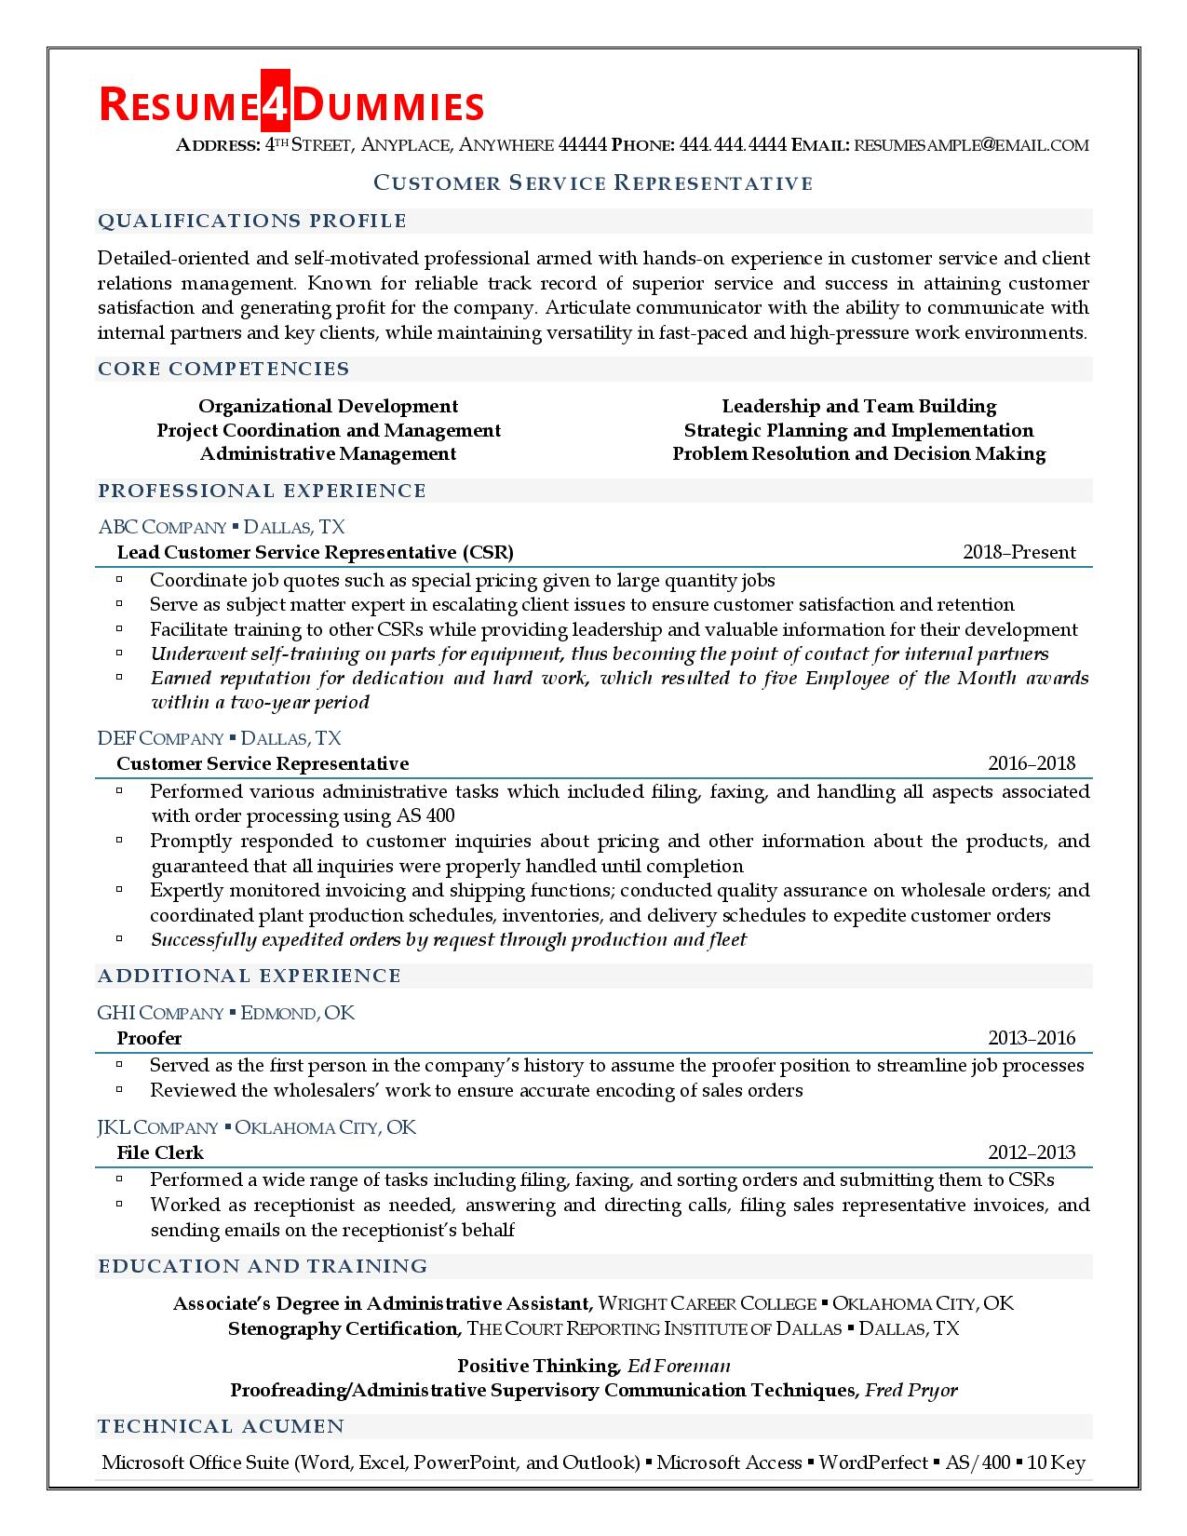 customer-service-representative-resume-resume4dummies